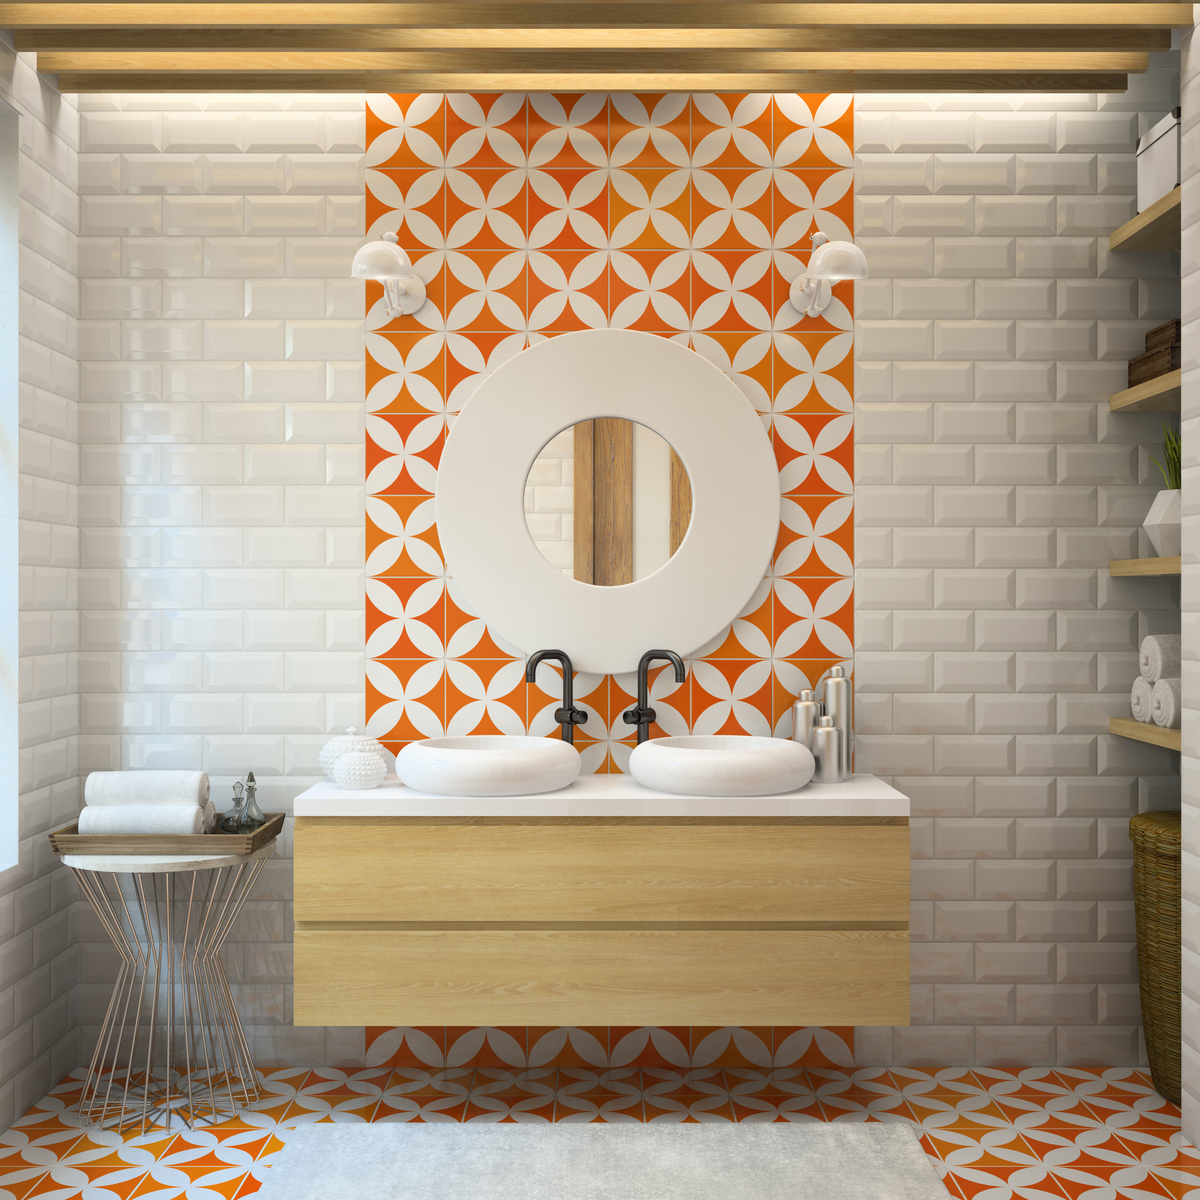 Modern bathroom in white and orange tile